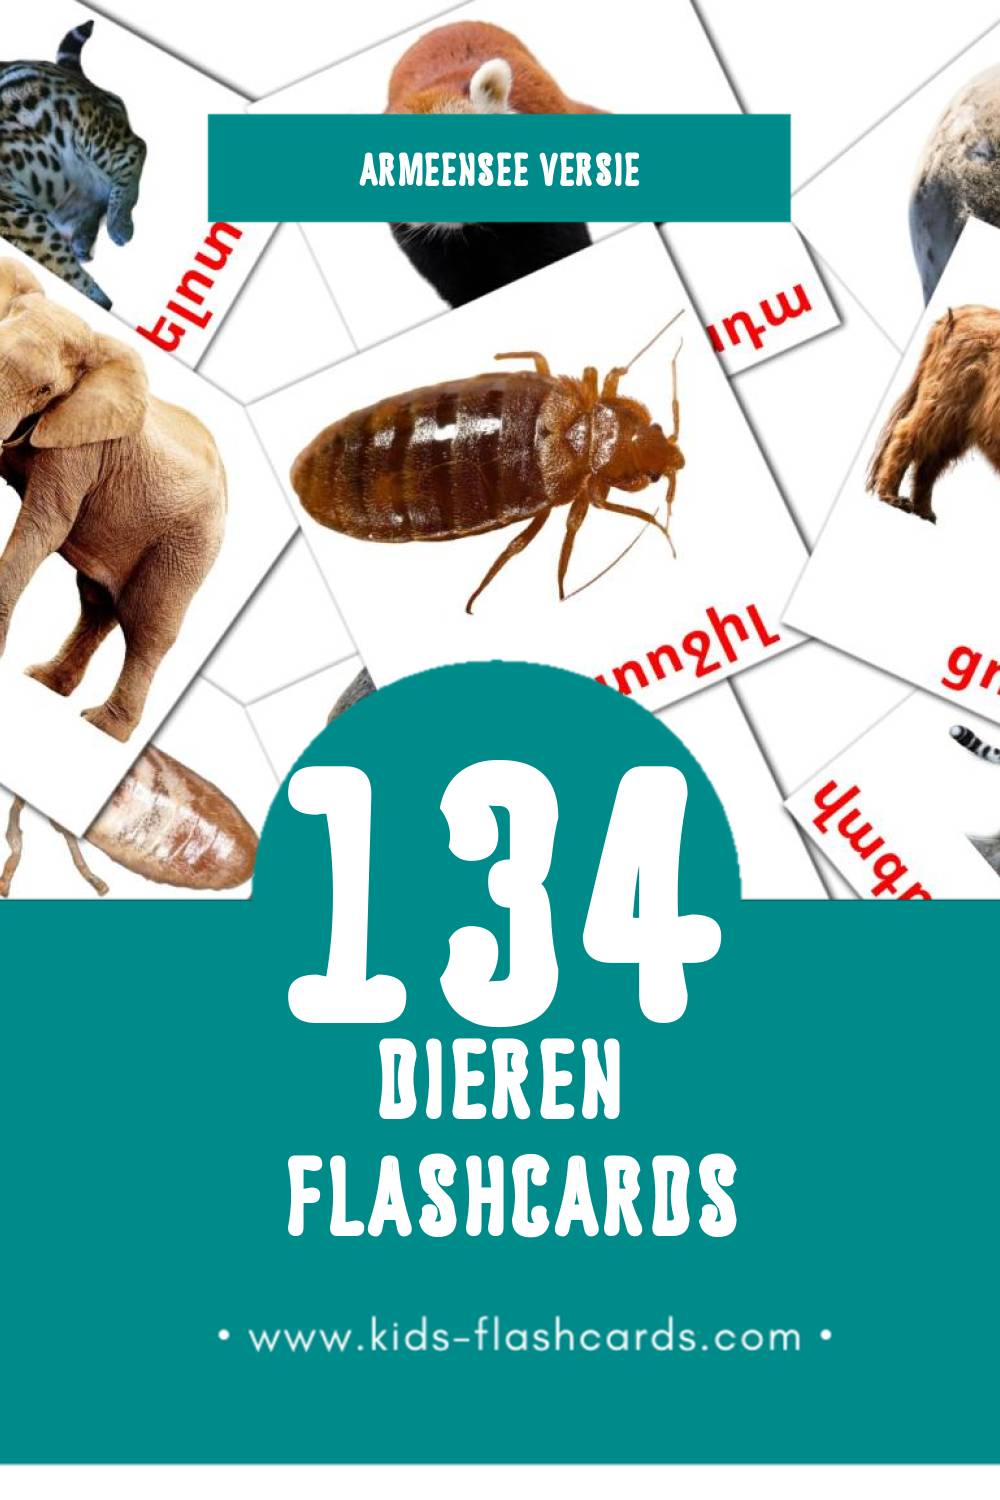 Visuele Կենդանիներ Flashcards voor Kleuters (134 kaarten in het Armeense)